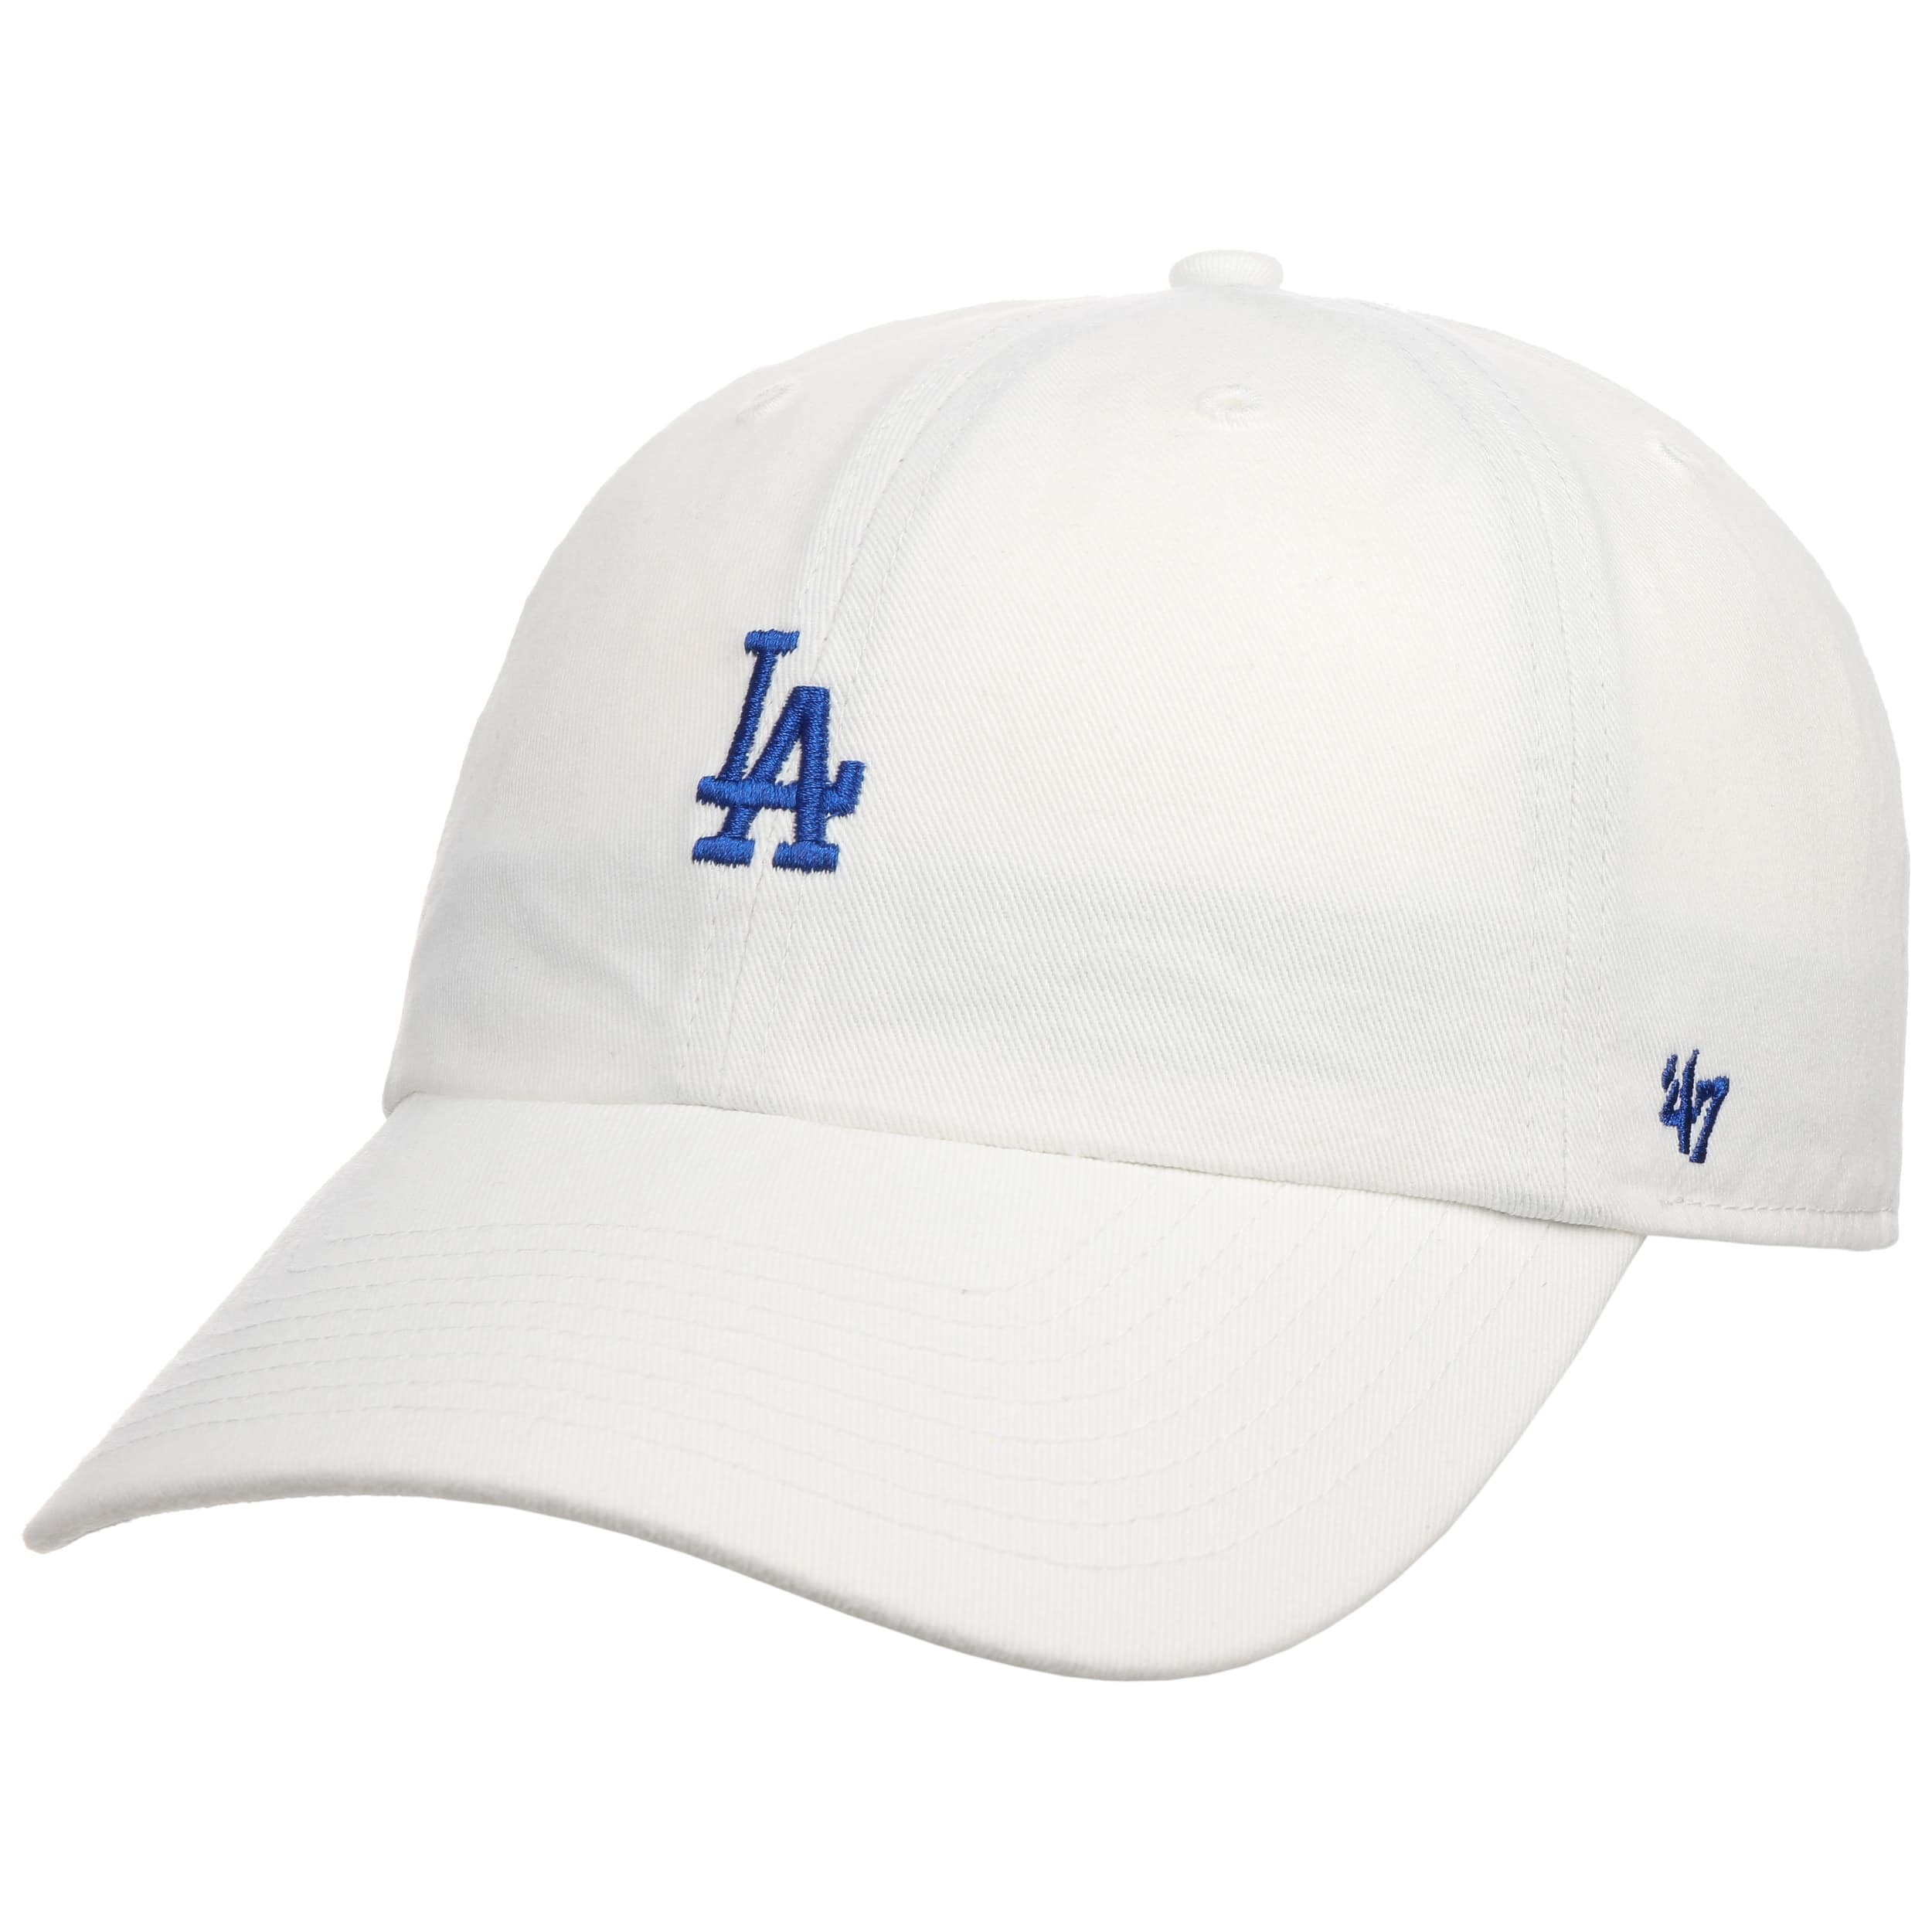 Base Runner Dodgers Cap by 47 Brand - 26,95 €